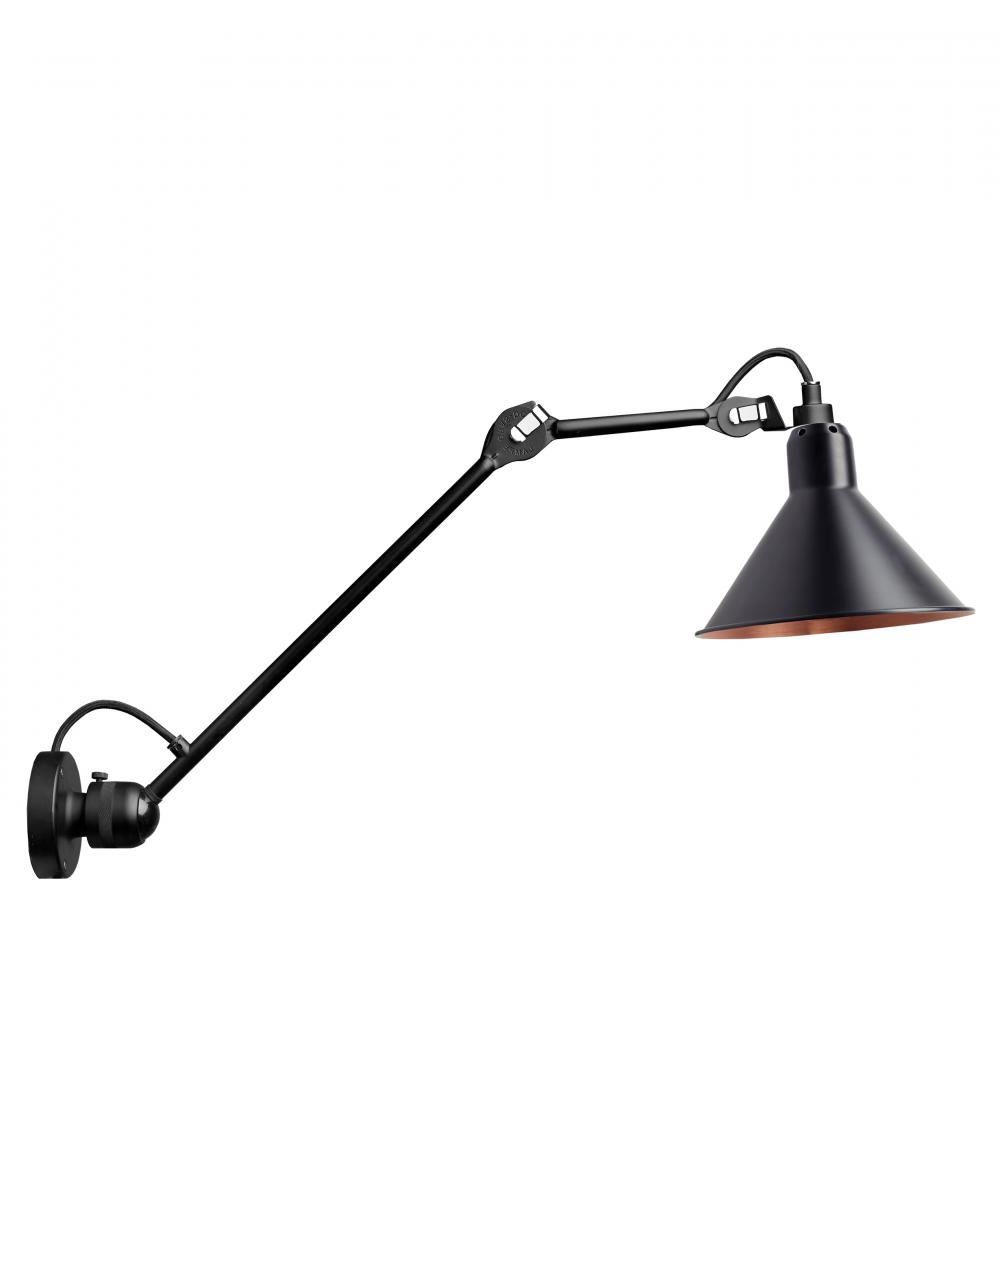 Lampe Gras 304 Medium Wall Light Black Shade With Copper Interior Conic Shade